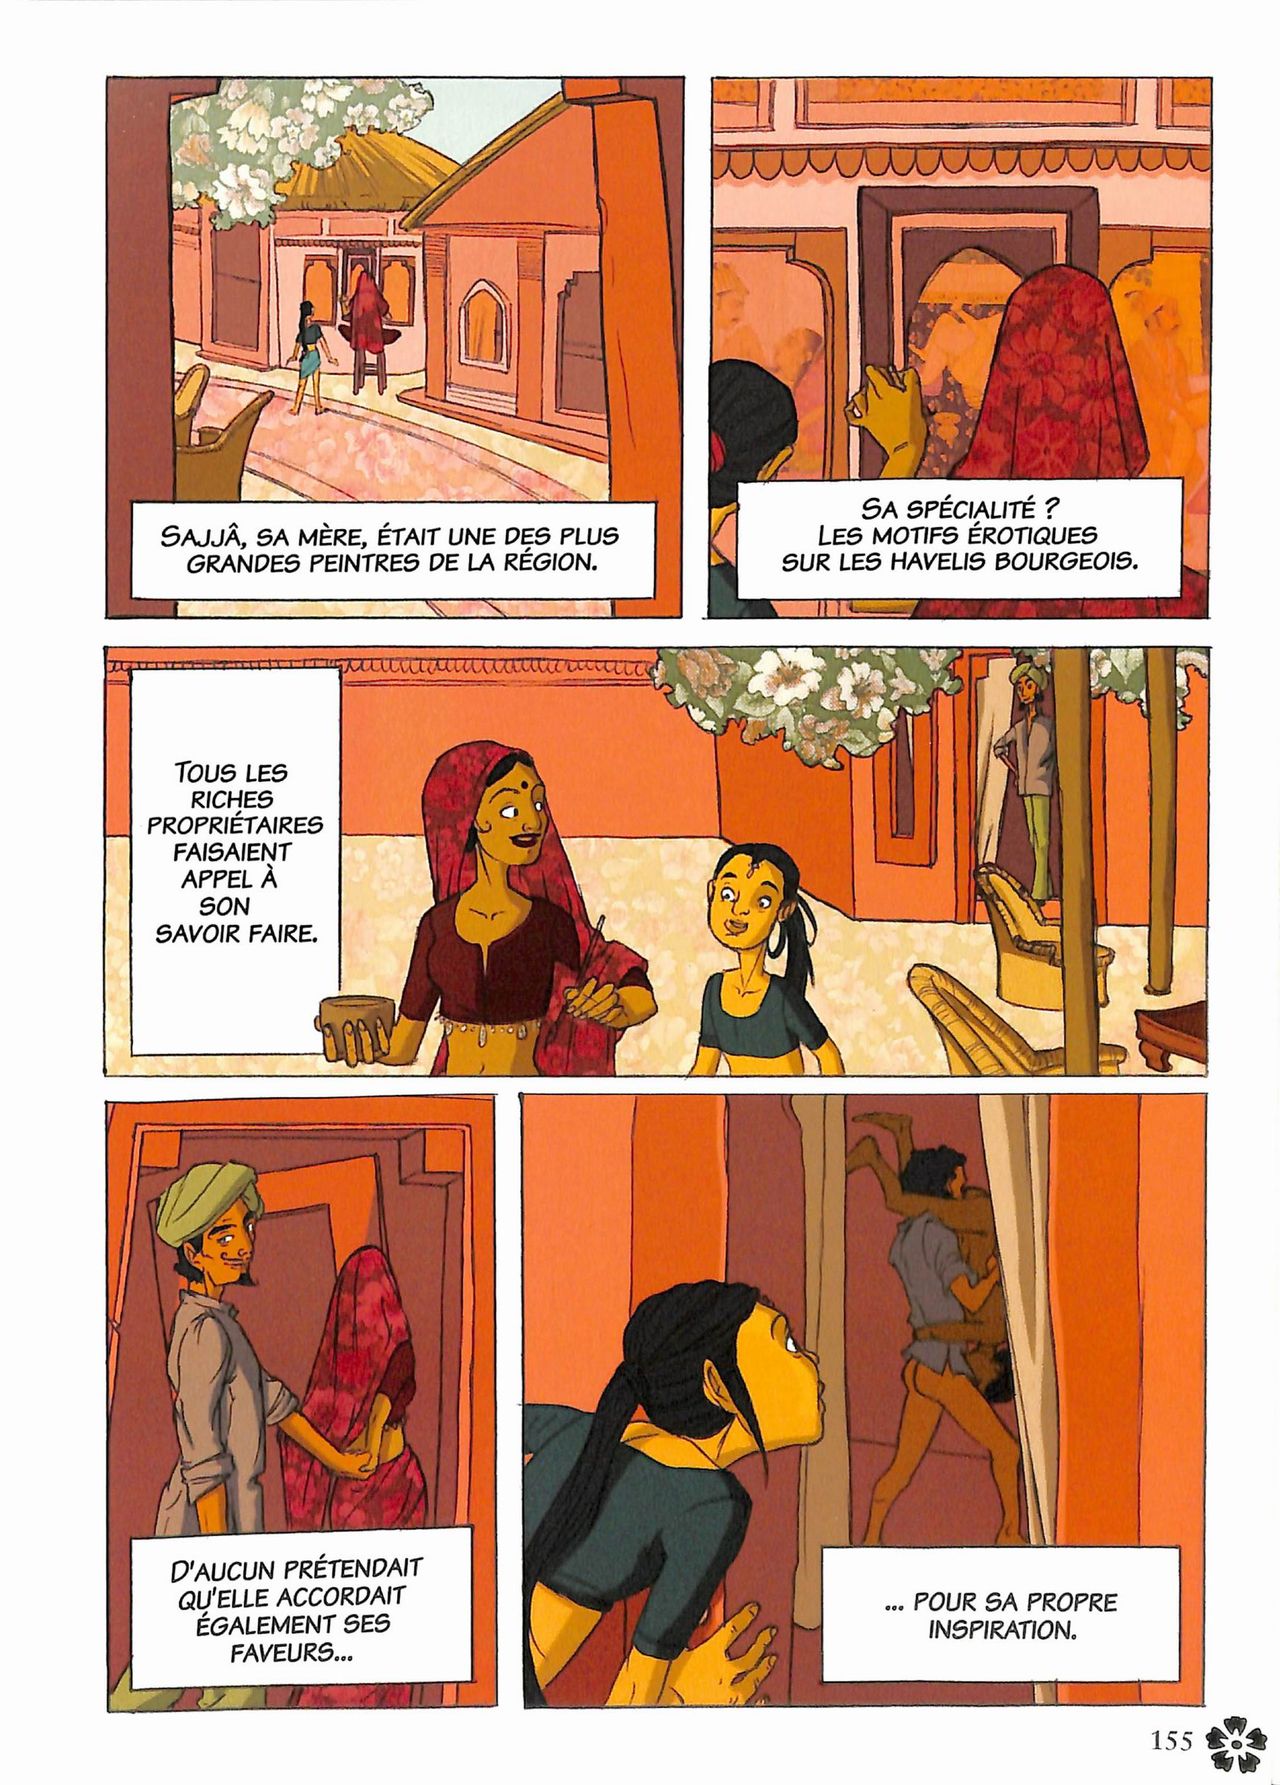 Kama Sutra en bandes dessinées - Kama Sutra with Comics numero d'image 155